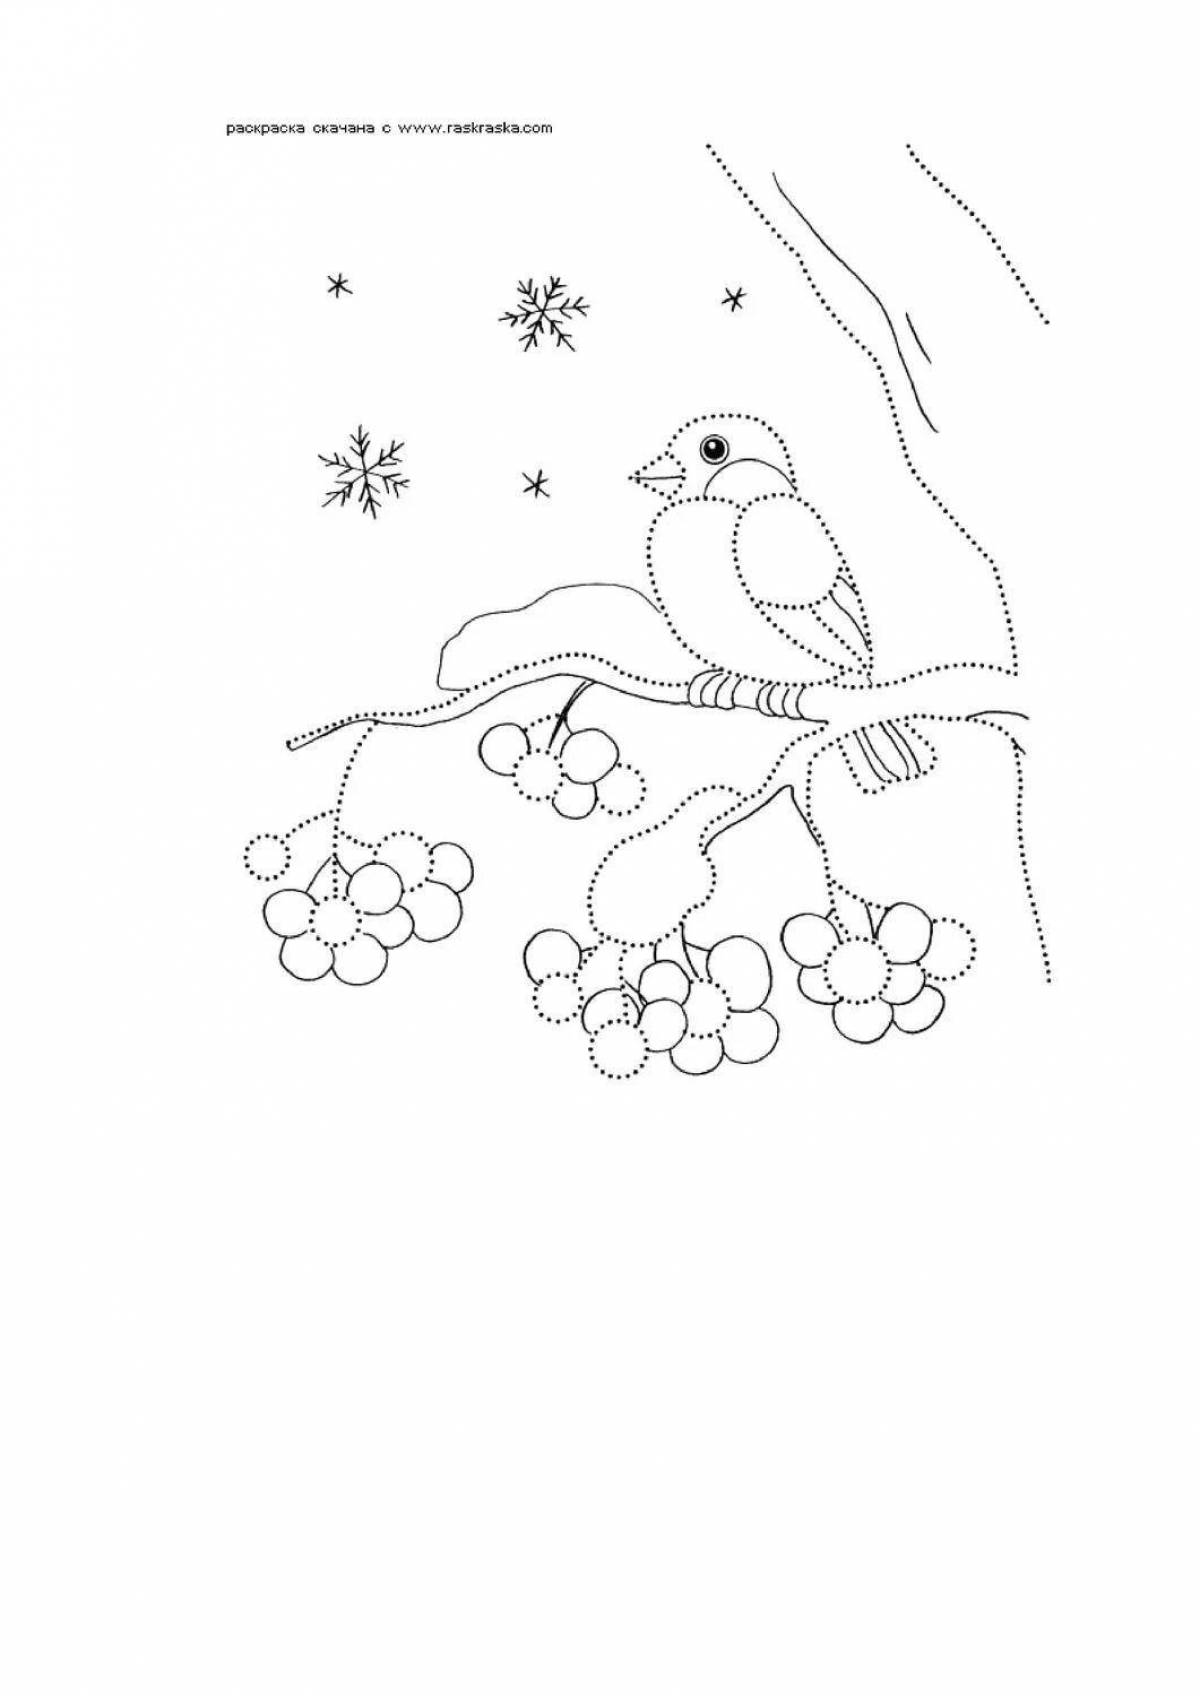 Shrill bullfinch on a branch drawing